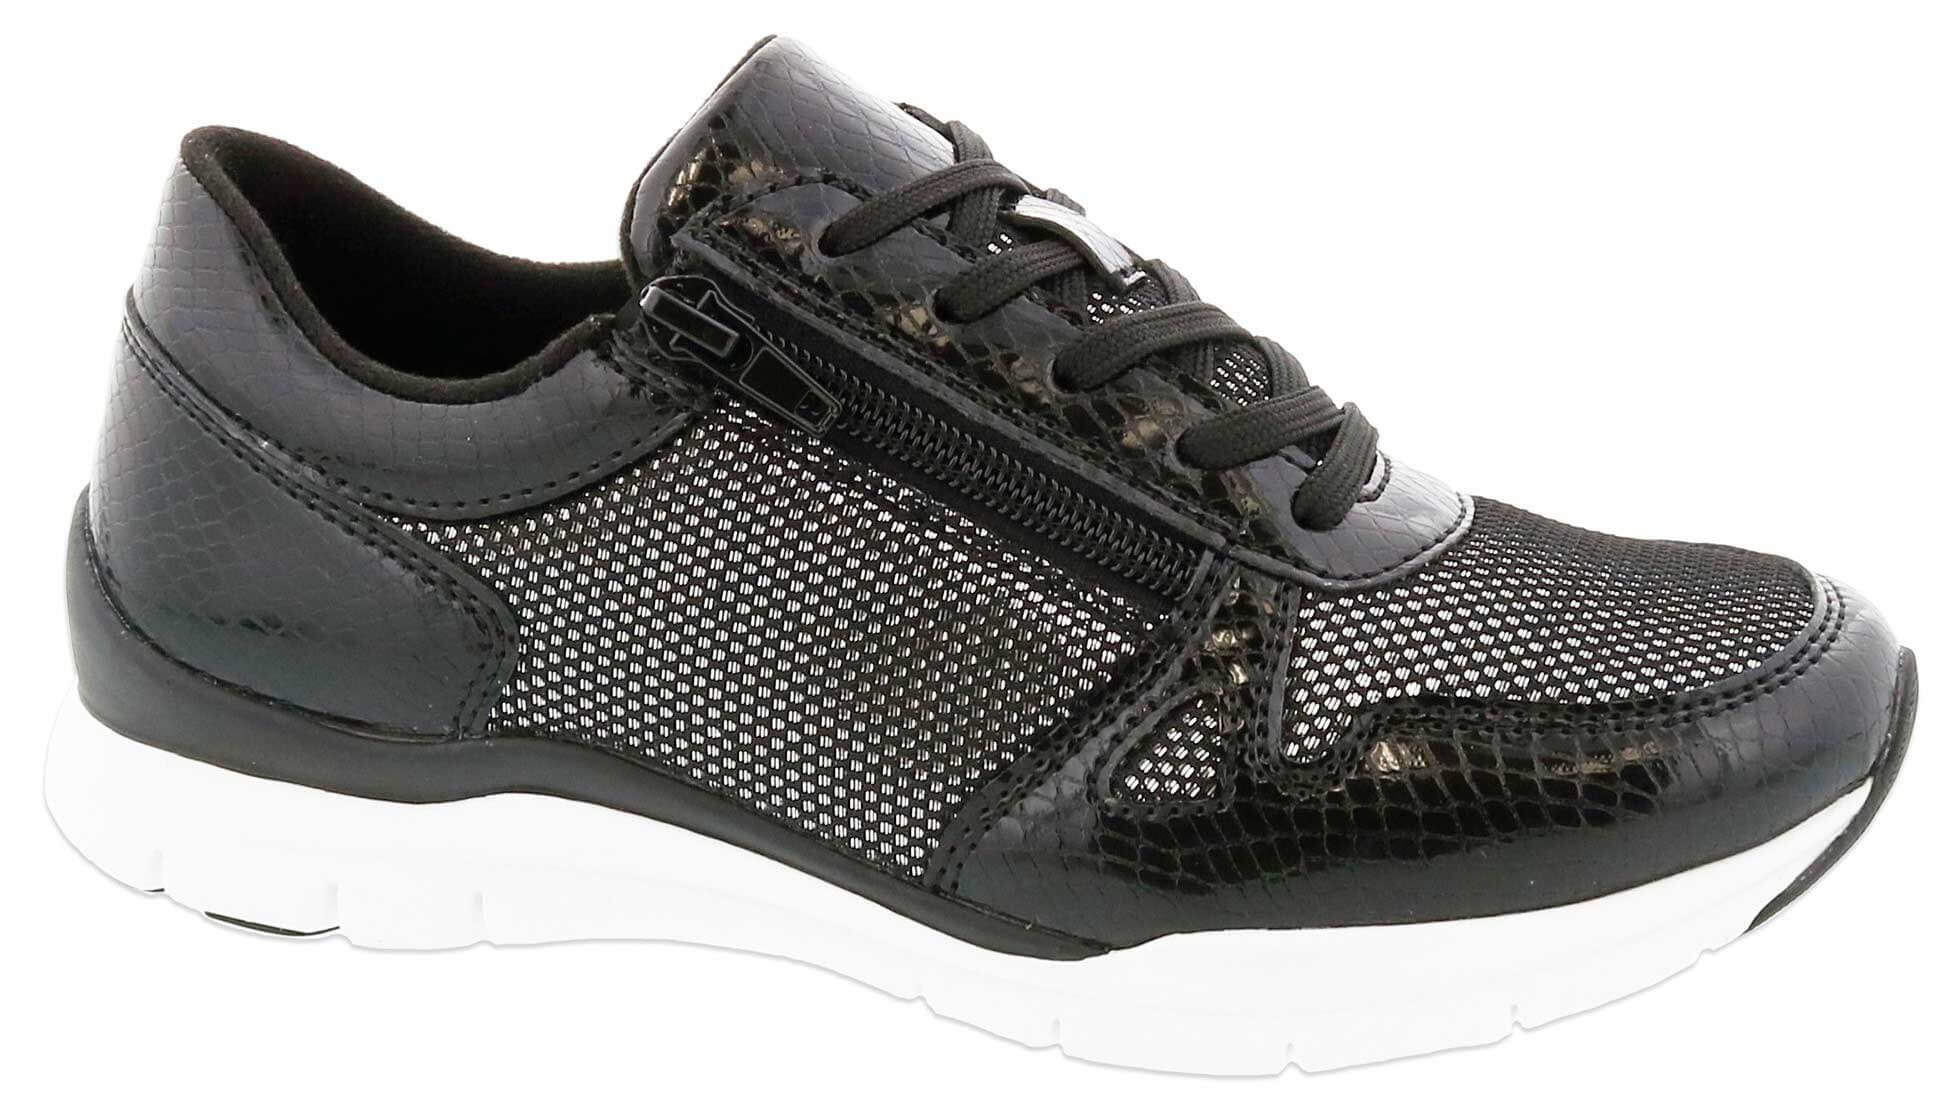 Footsaver Shoes Lattice 82042 - Women's Casual Comfort Therapeutic Diabetic Shoe - Extra Depth For Orthotics